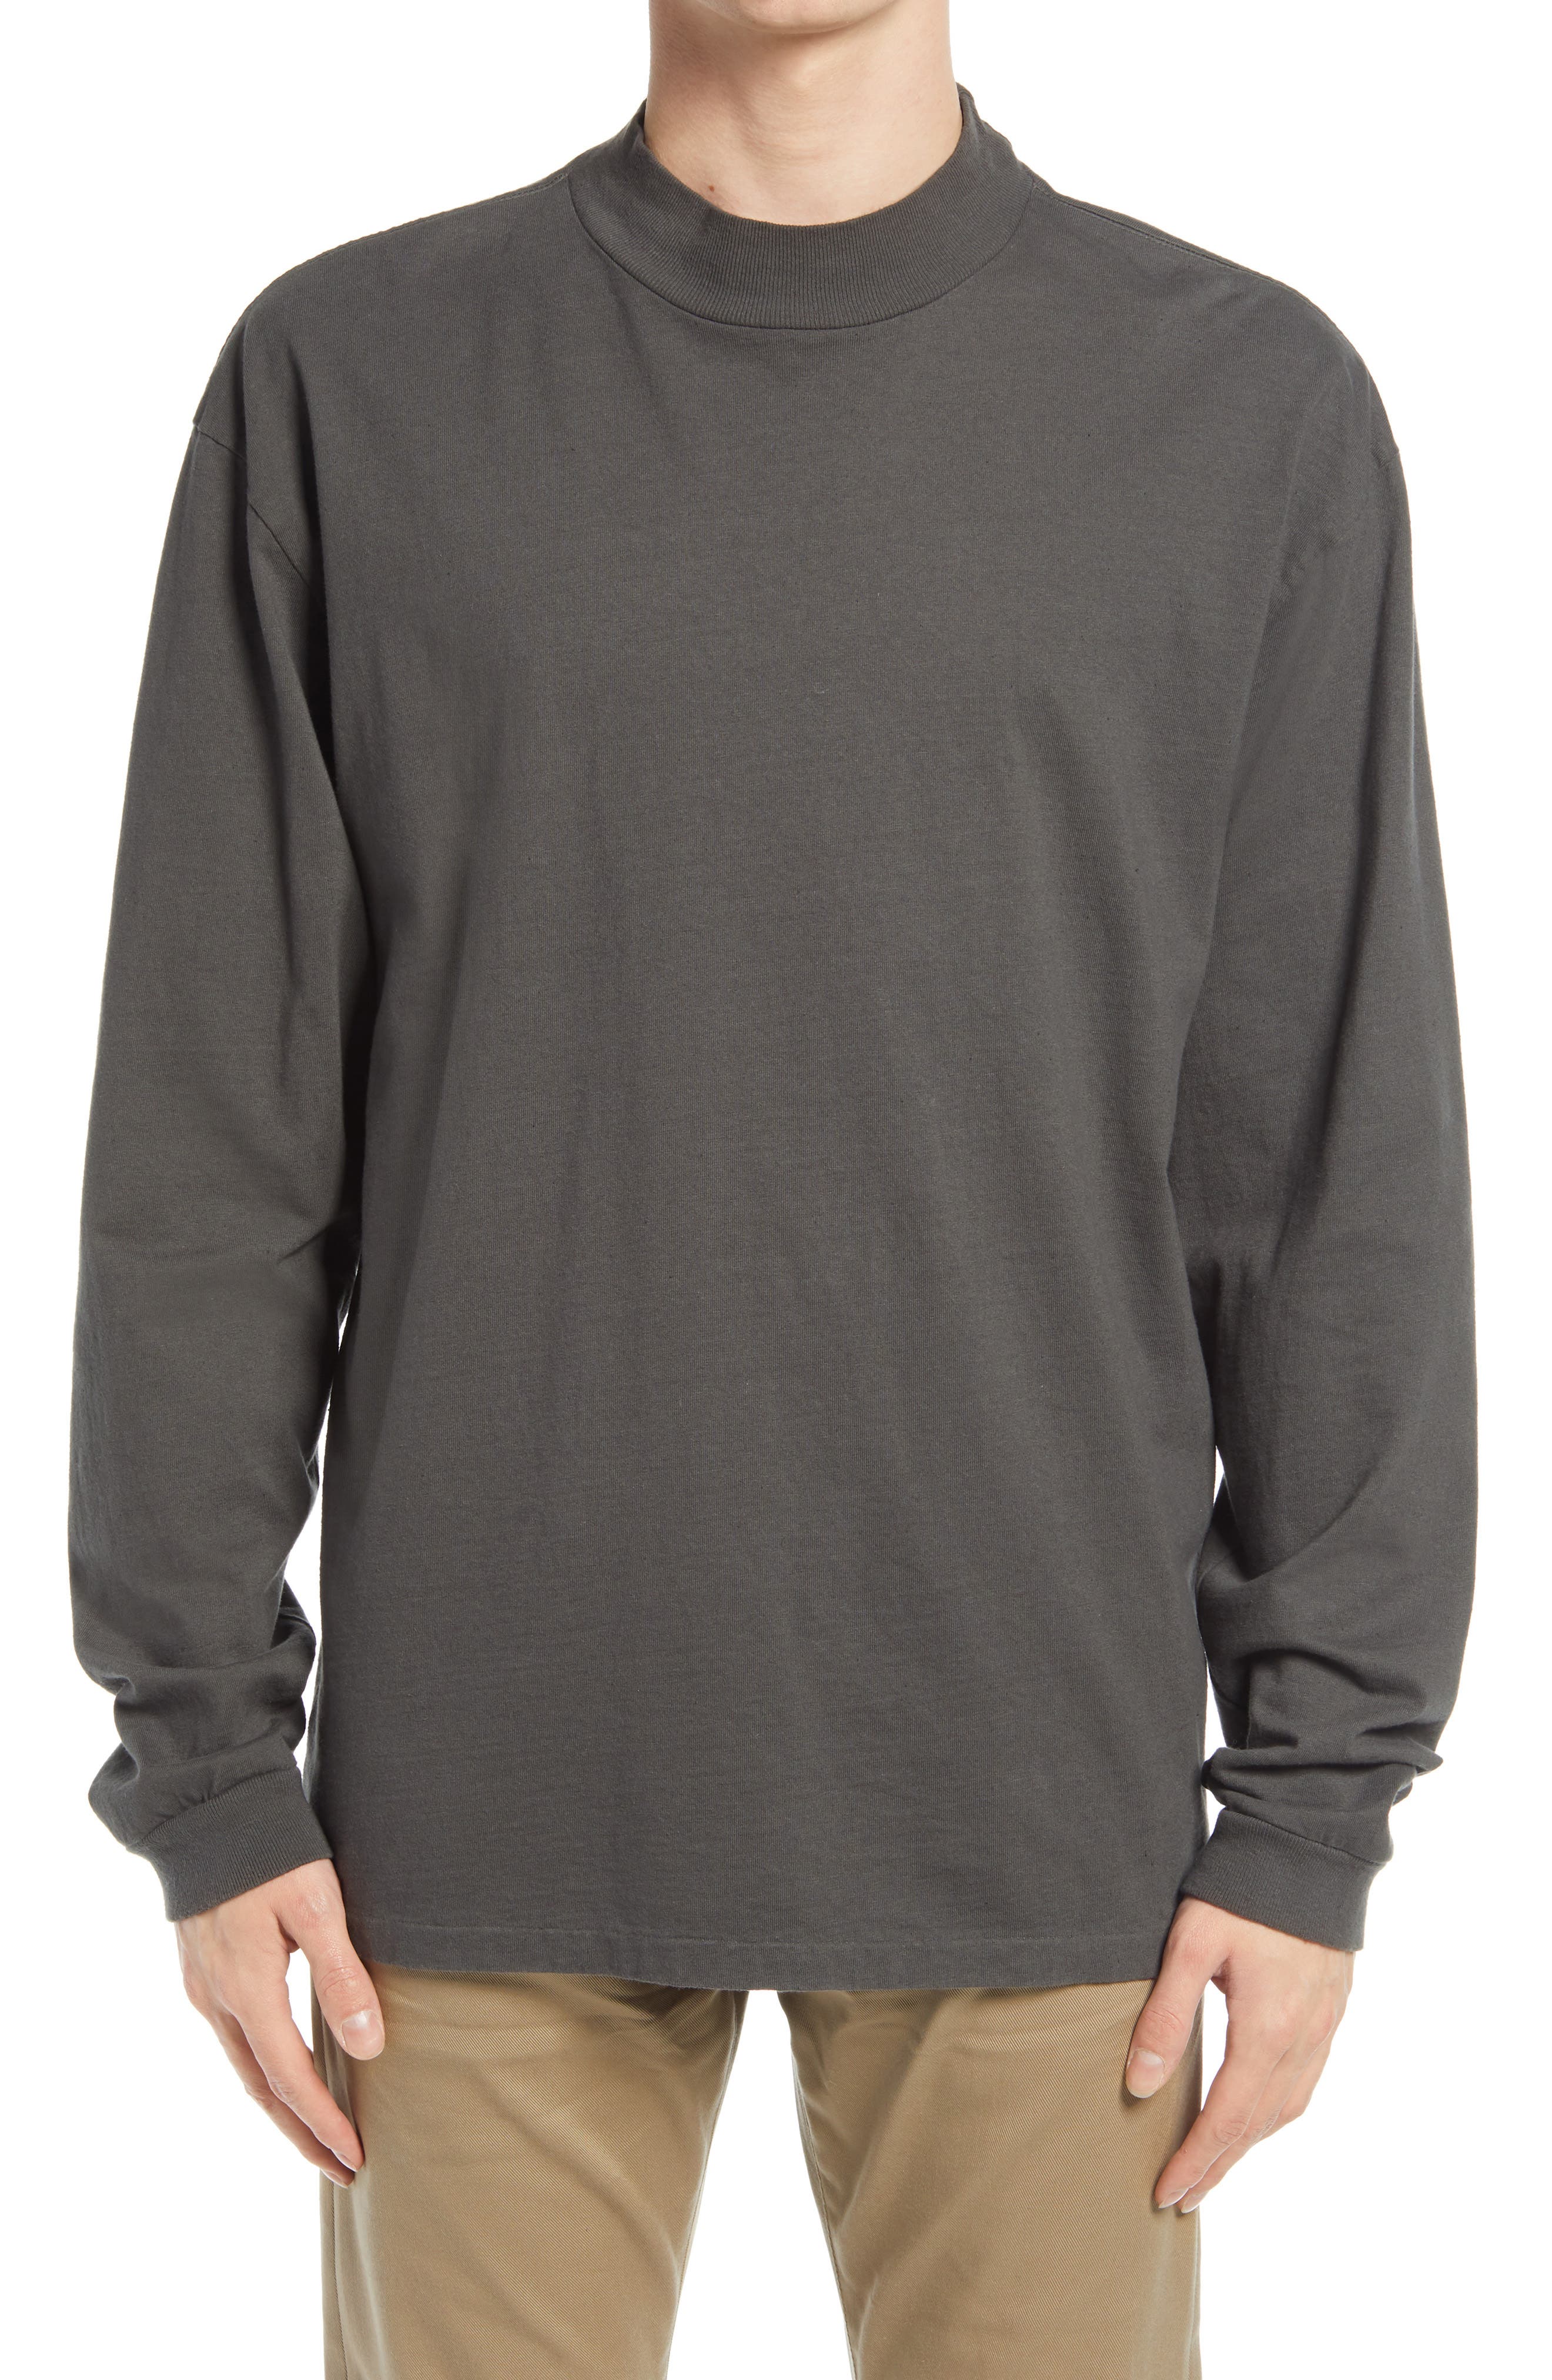 John Elliott Men's 900 Long Sleeve Mock Neck T-Shirt in Charcoal at Nordstrom, Size X-Small